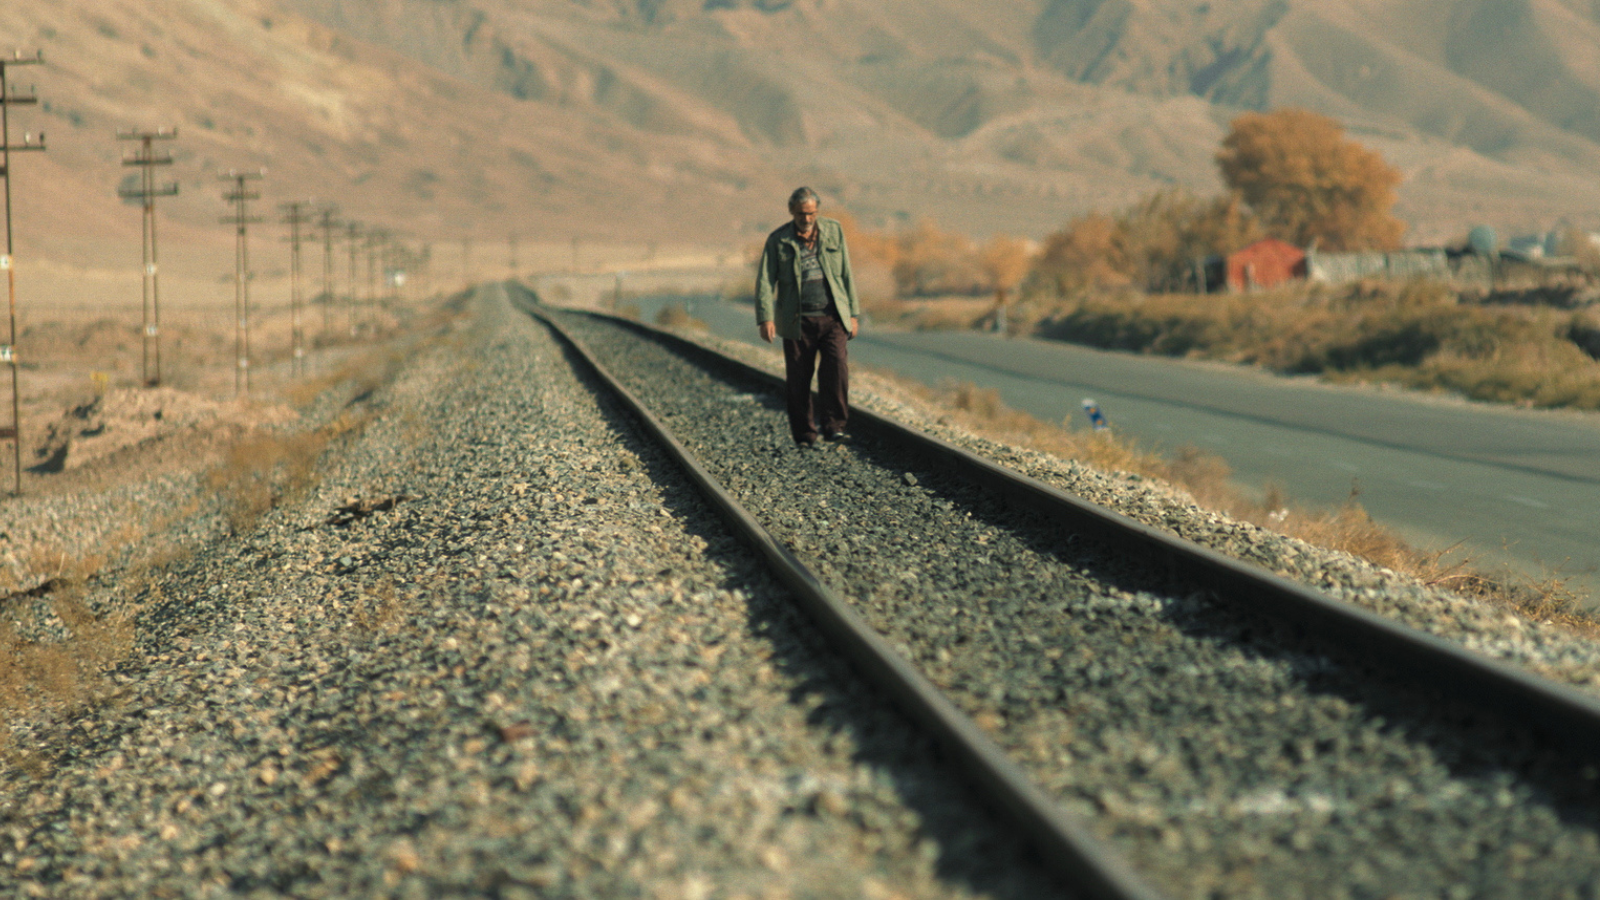 An old man wanders empty railroad tracks along a dusty highway